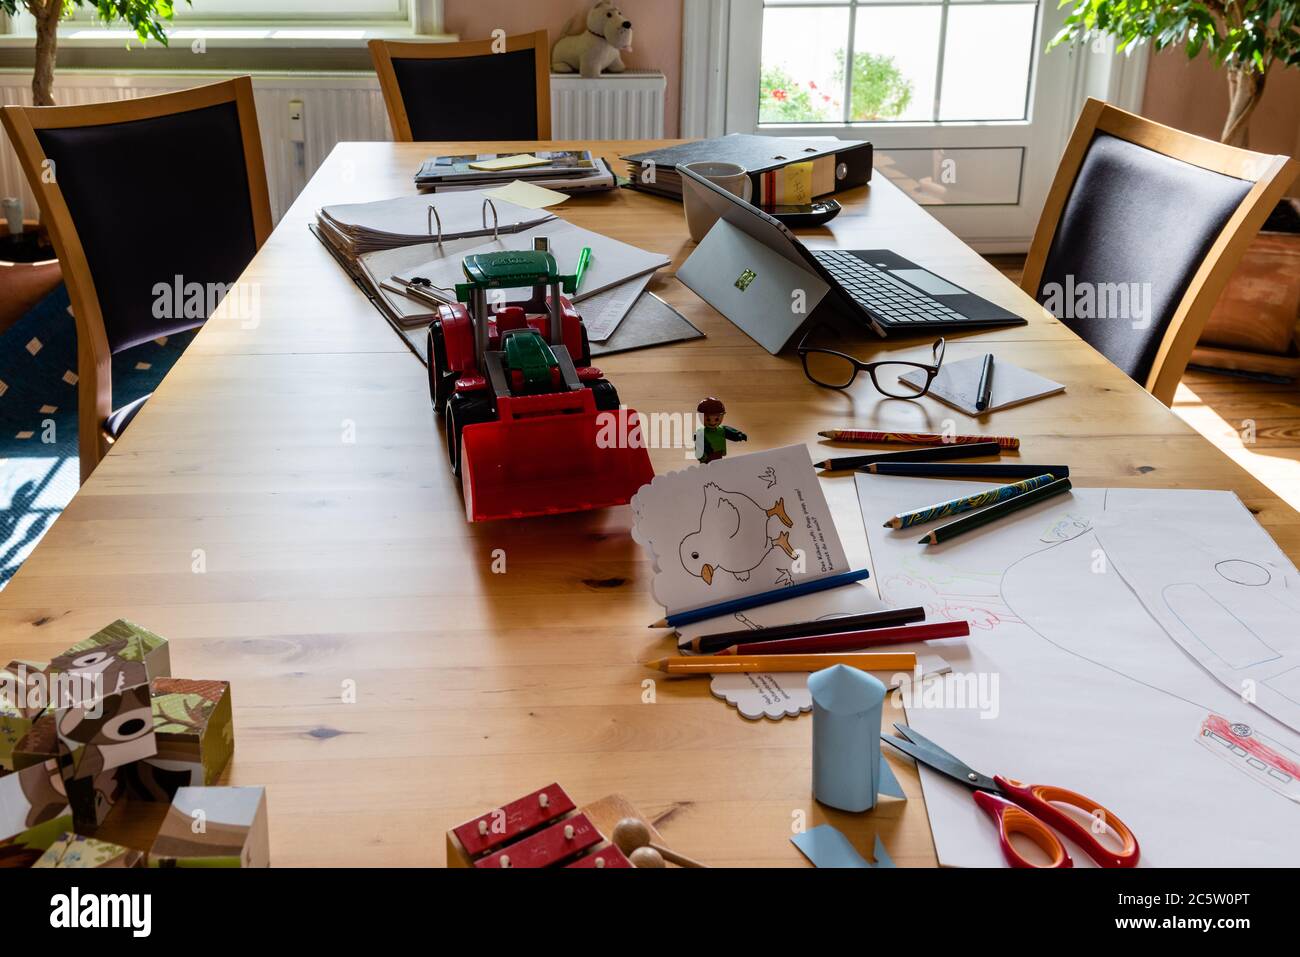 Wegen der Corona Pandemie werden viele Arbeitplätze in das Home Office verlagert Foto de stock